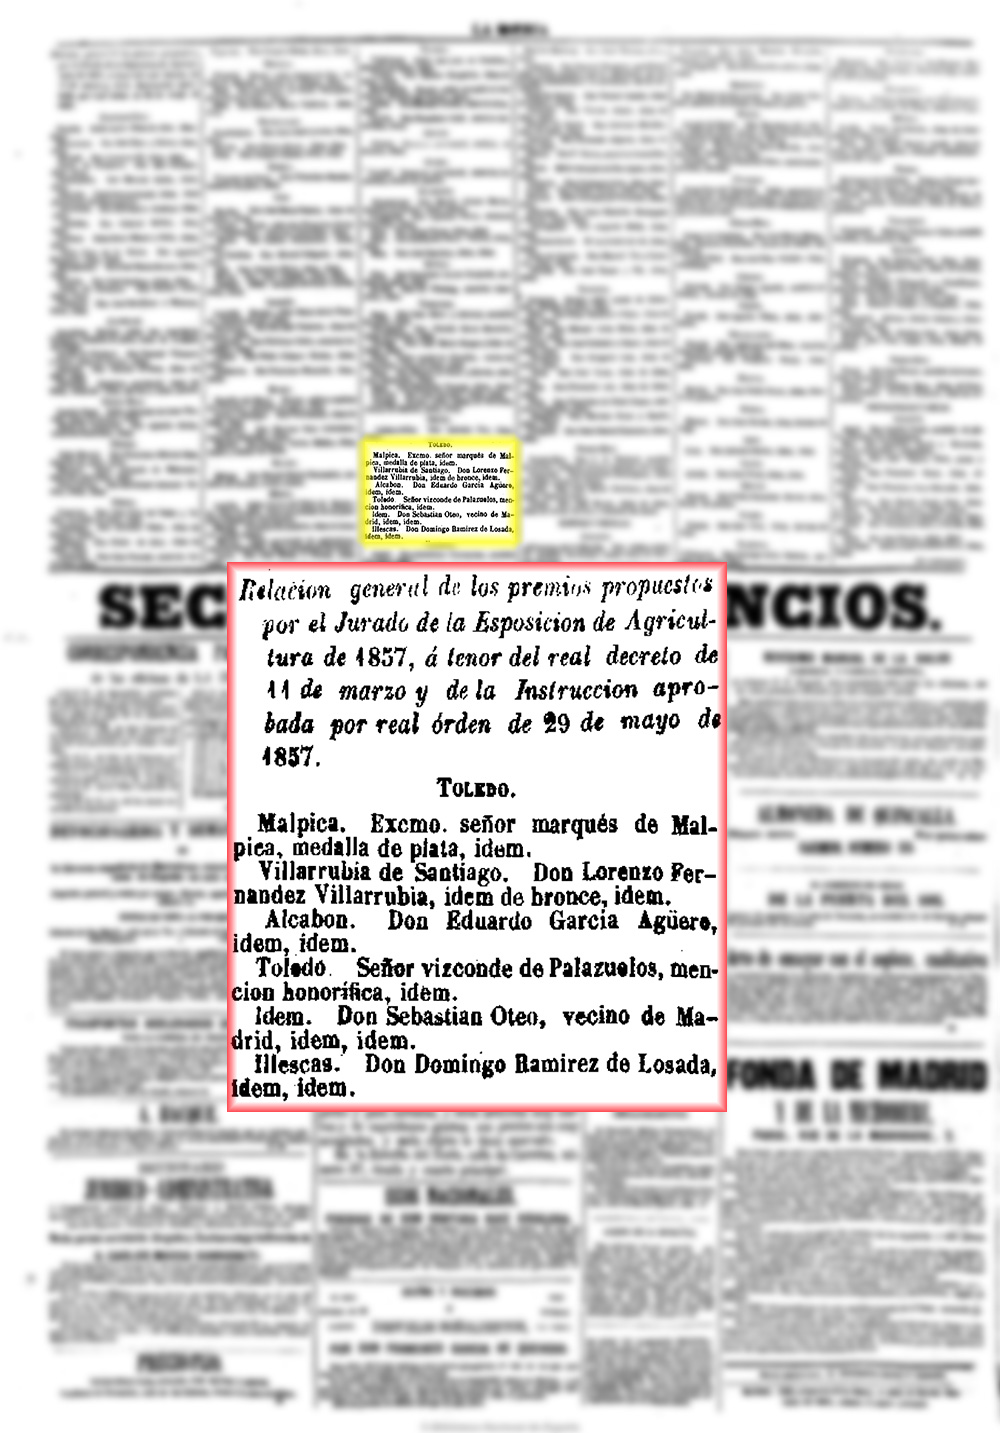  La Iberia 24/3/1858, página 4. Medalla de plata al aceite del marqués de Malpica 